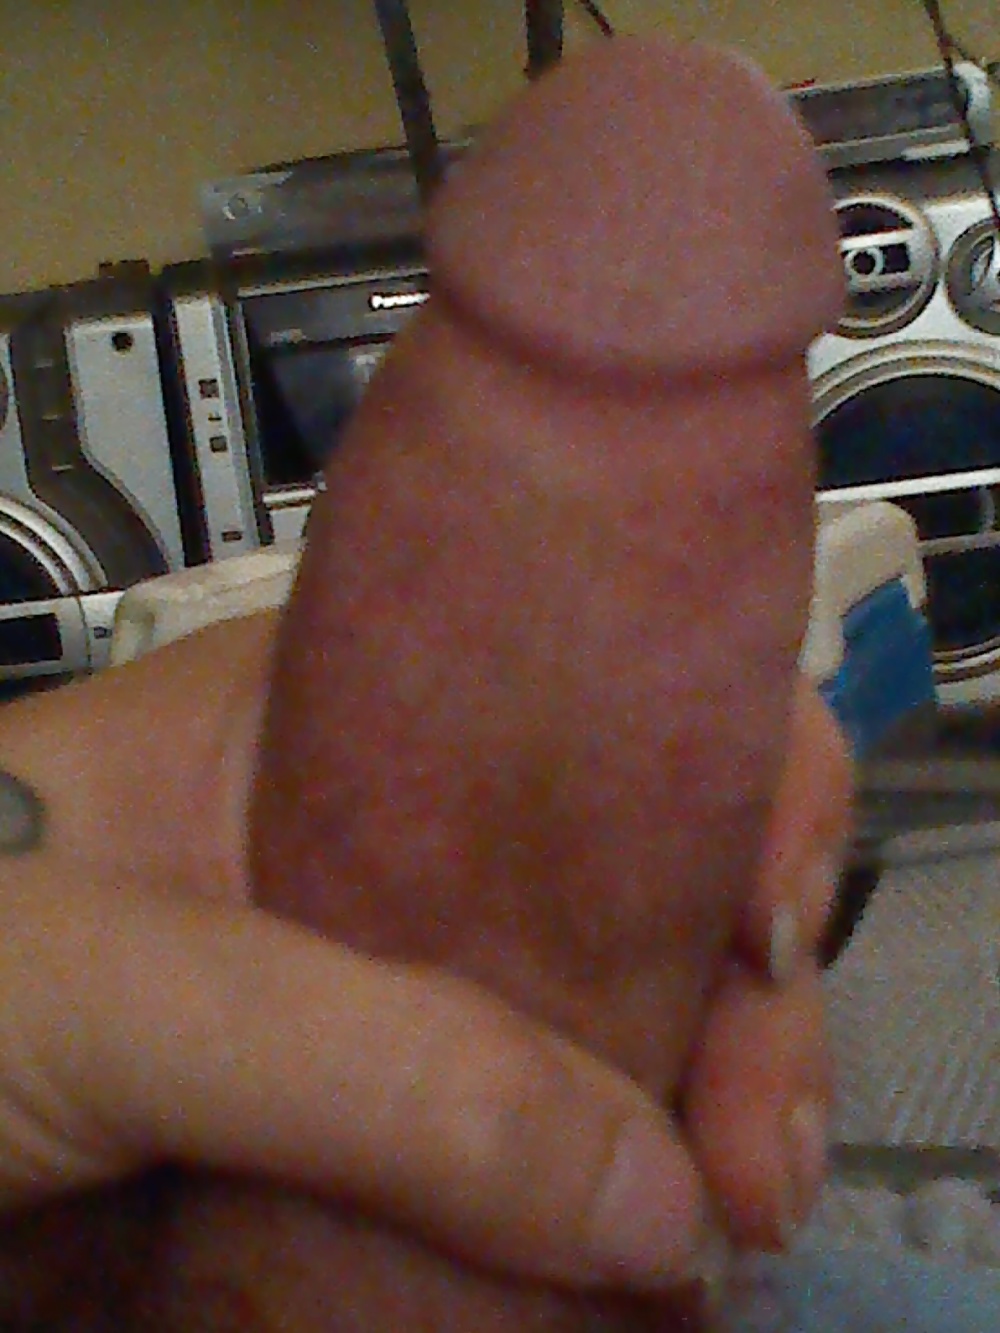 My 7.5 inch dick #28661759